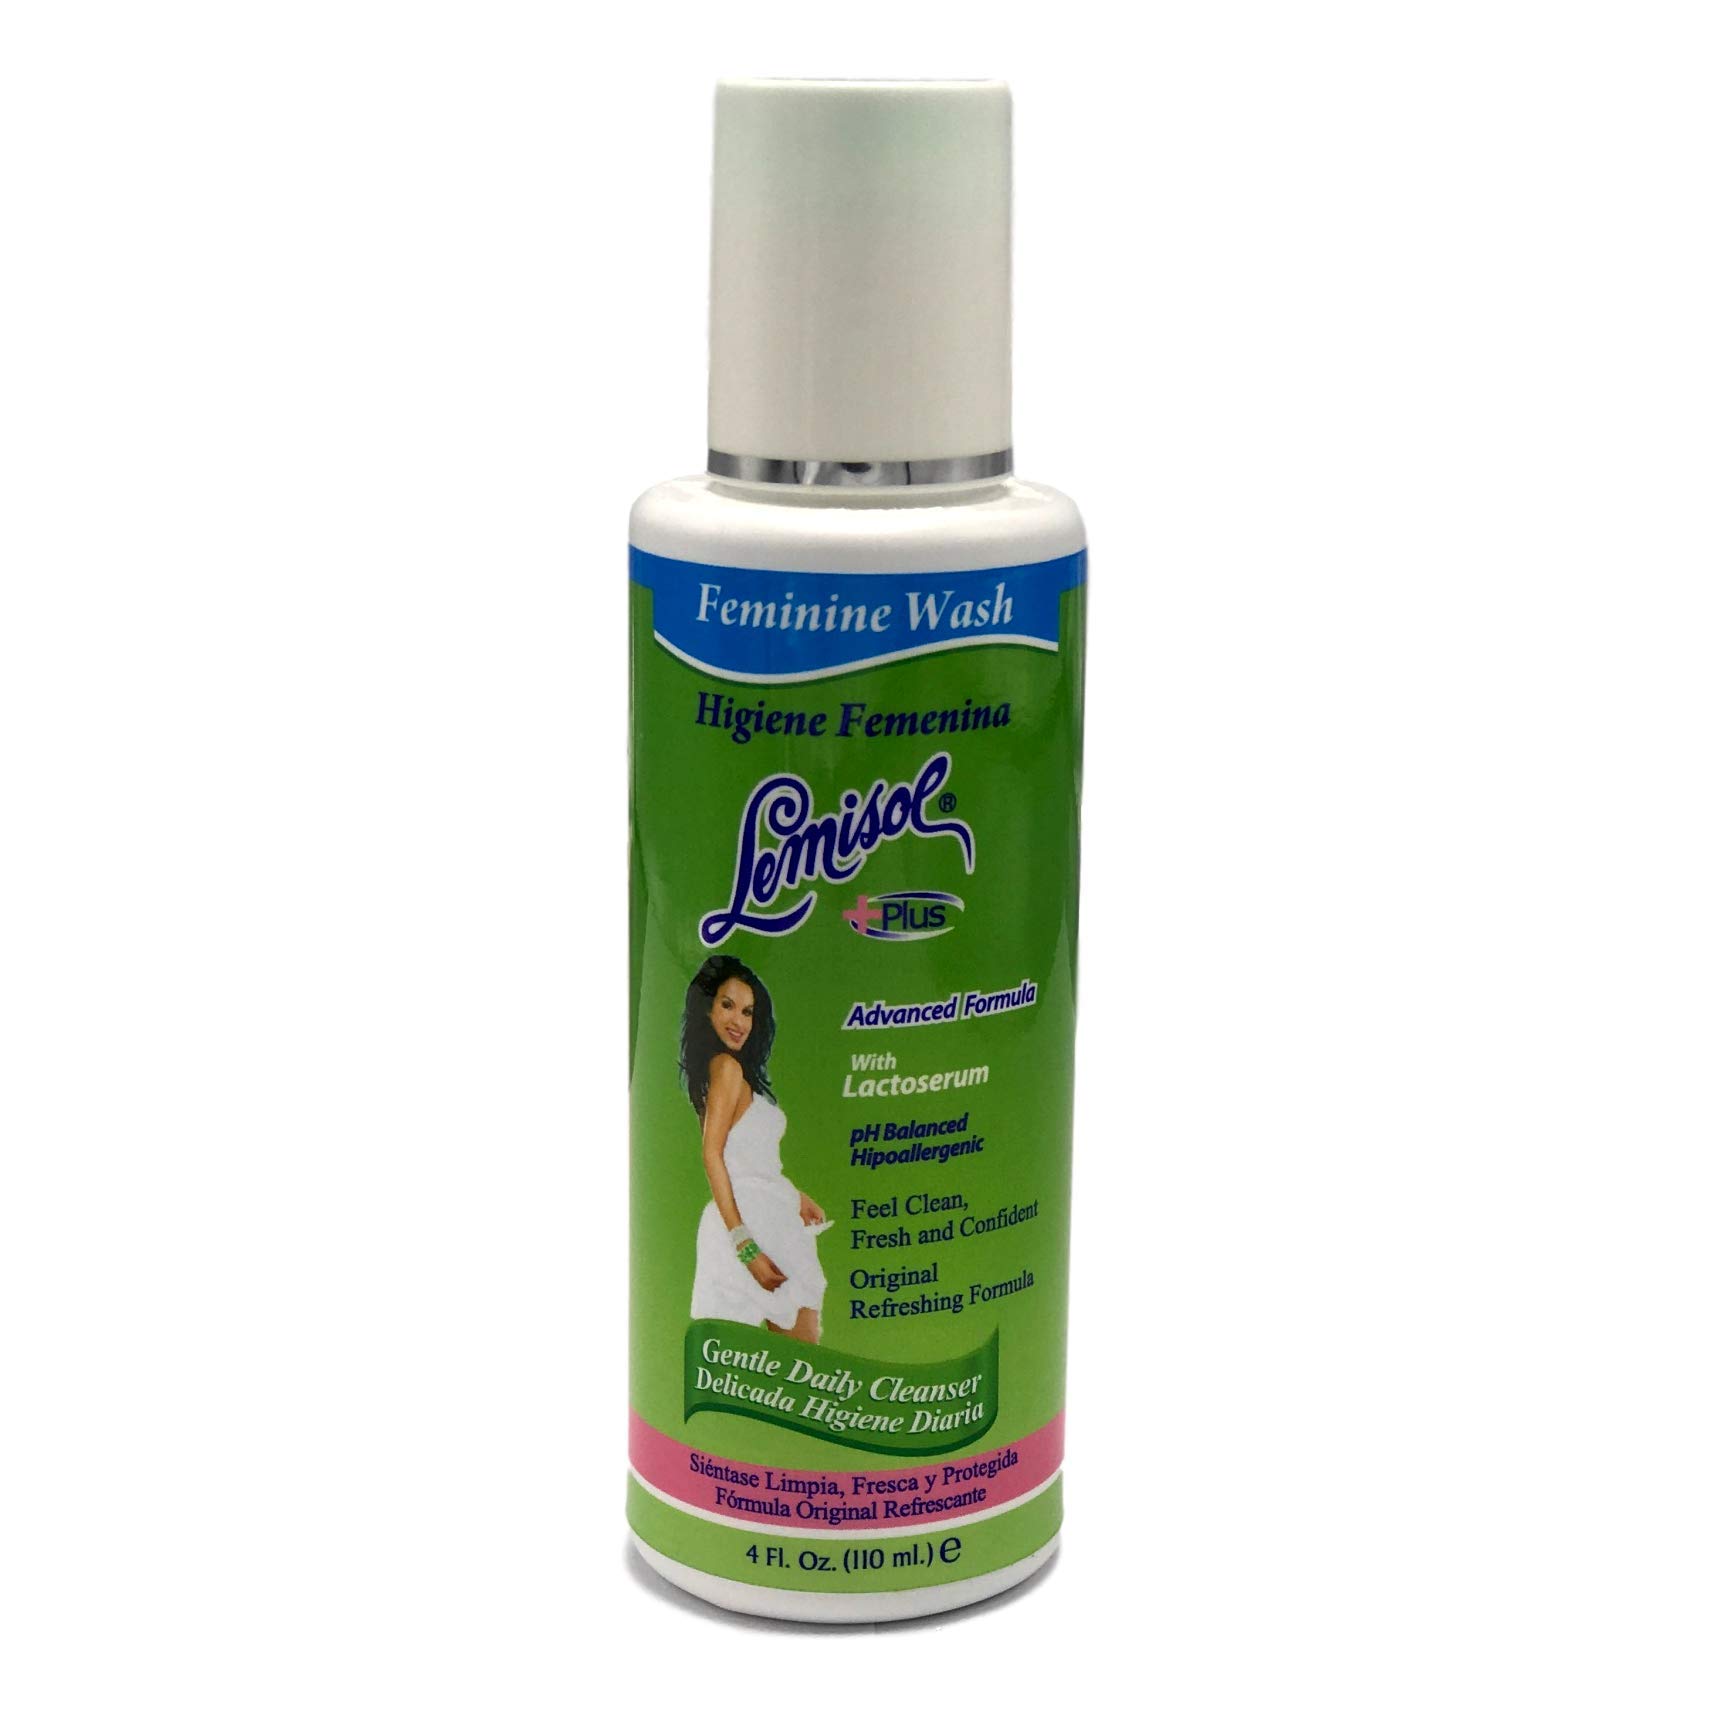 Lemisol Plus Feminine Wash Gentle Daily Cleanser 4oz (2 Pack) by Lemisol